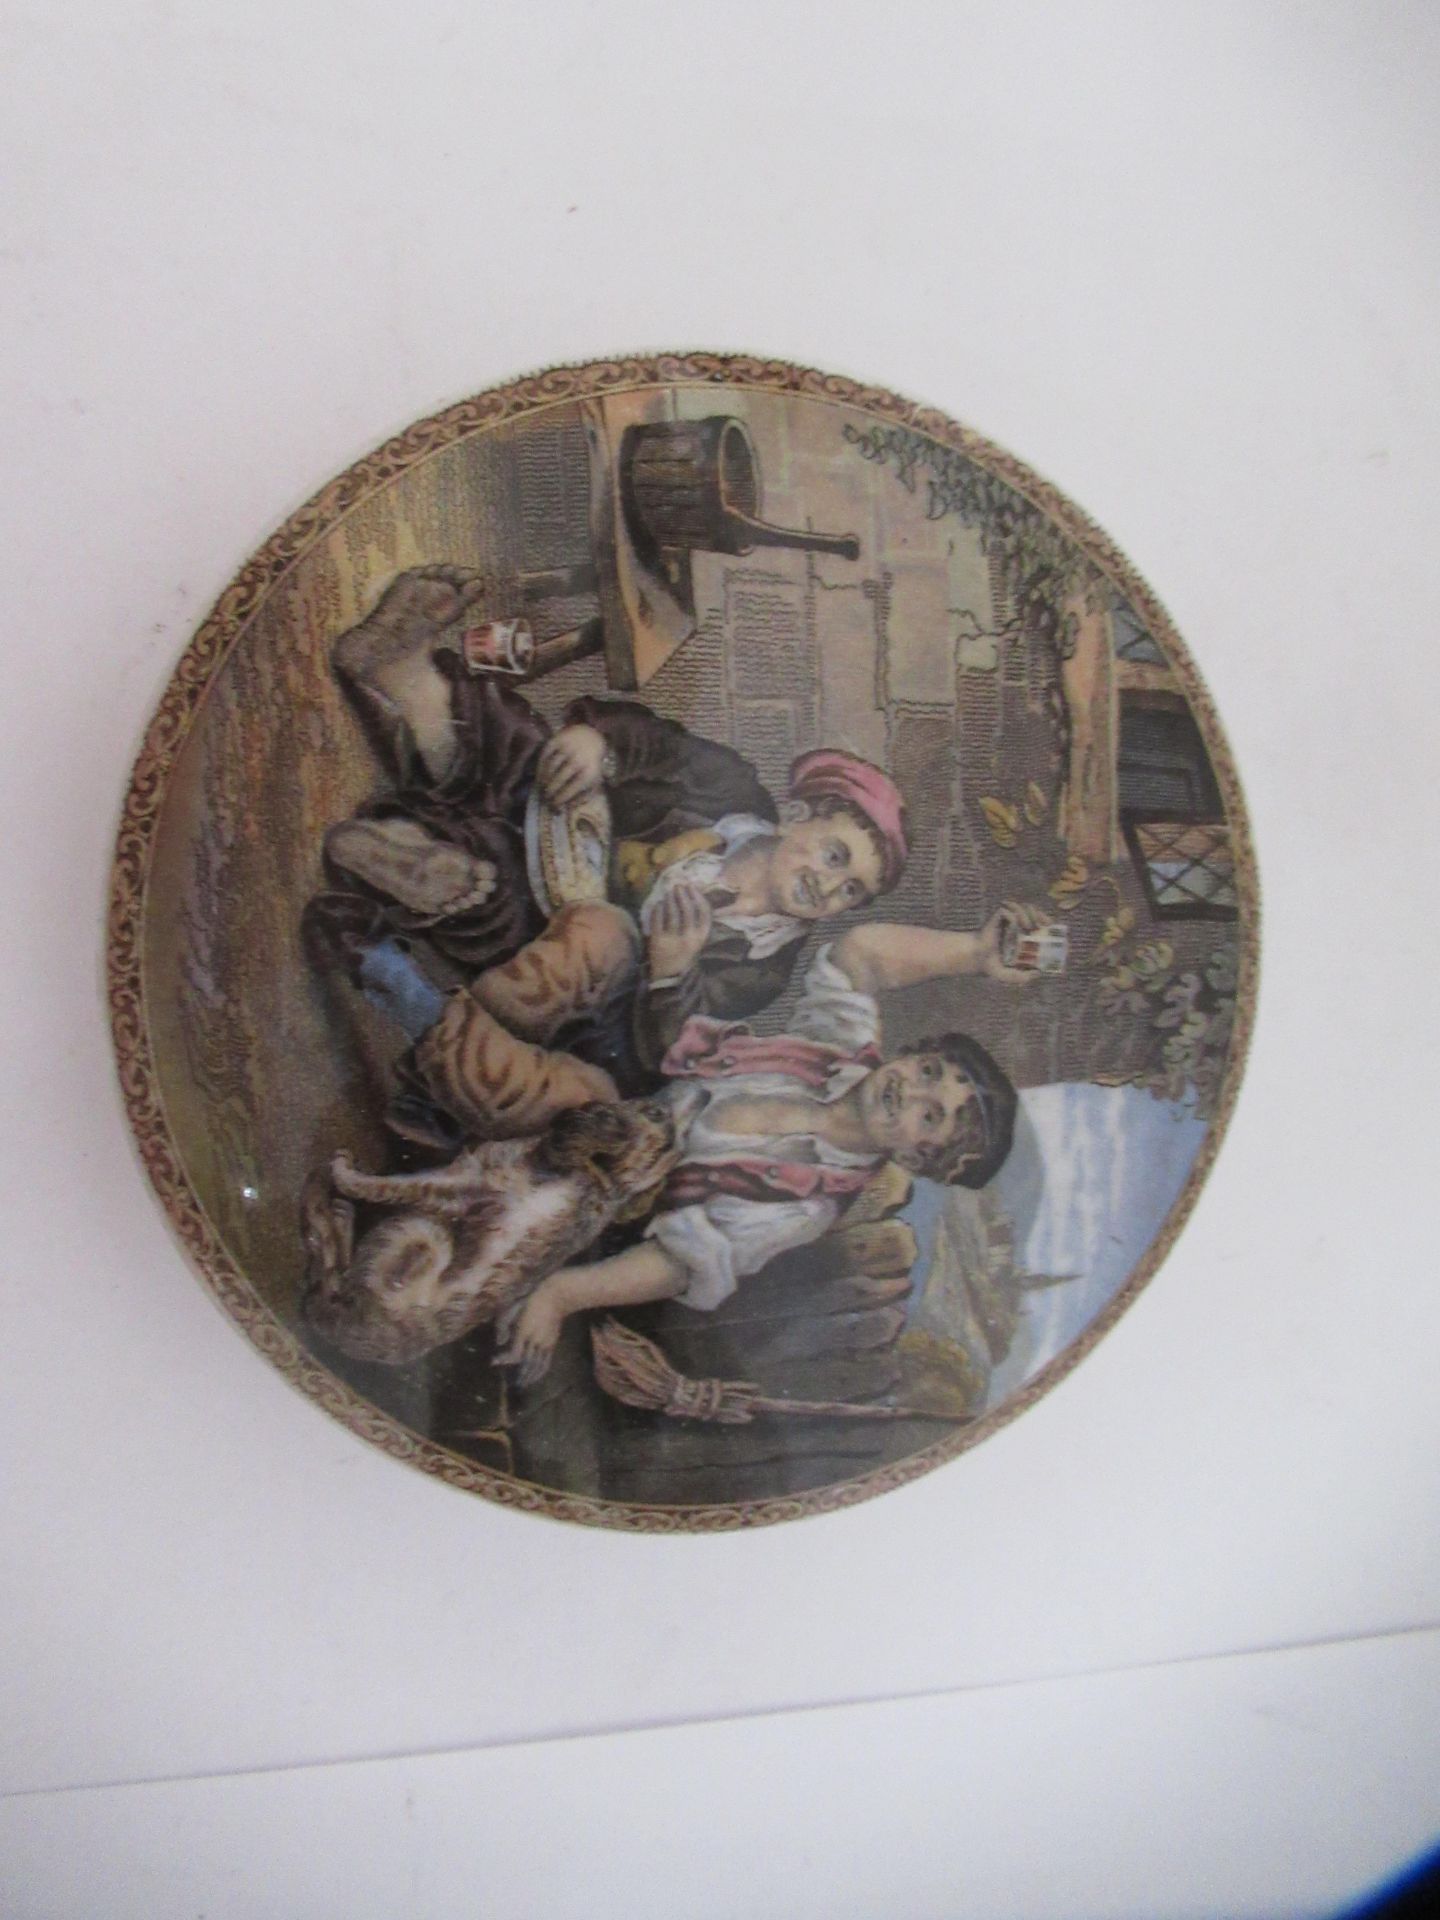 6x Prattware ceramic lids including 'The Best Card', 'Wimbledon July 2nd 1860', 'The Village Wedding - Image 13 of 22